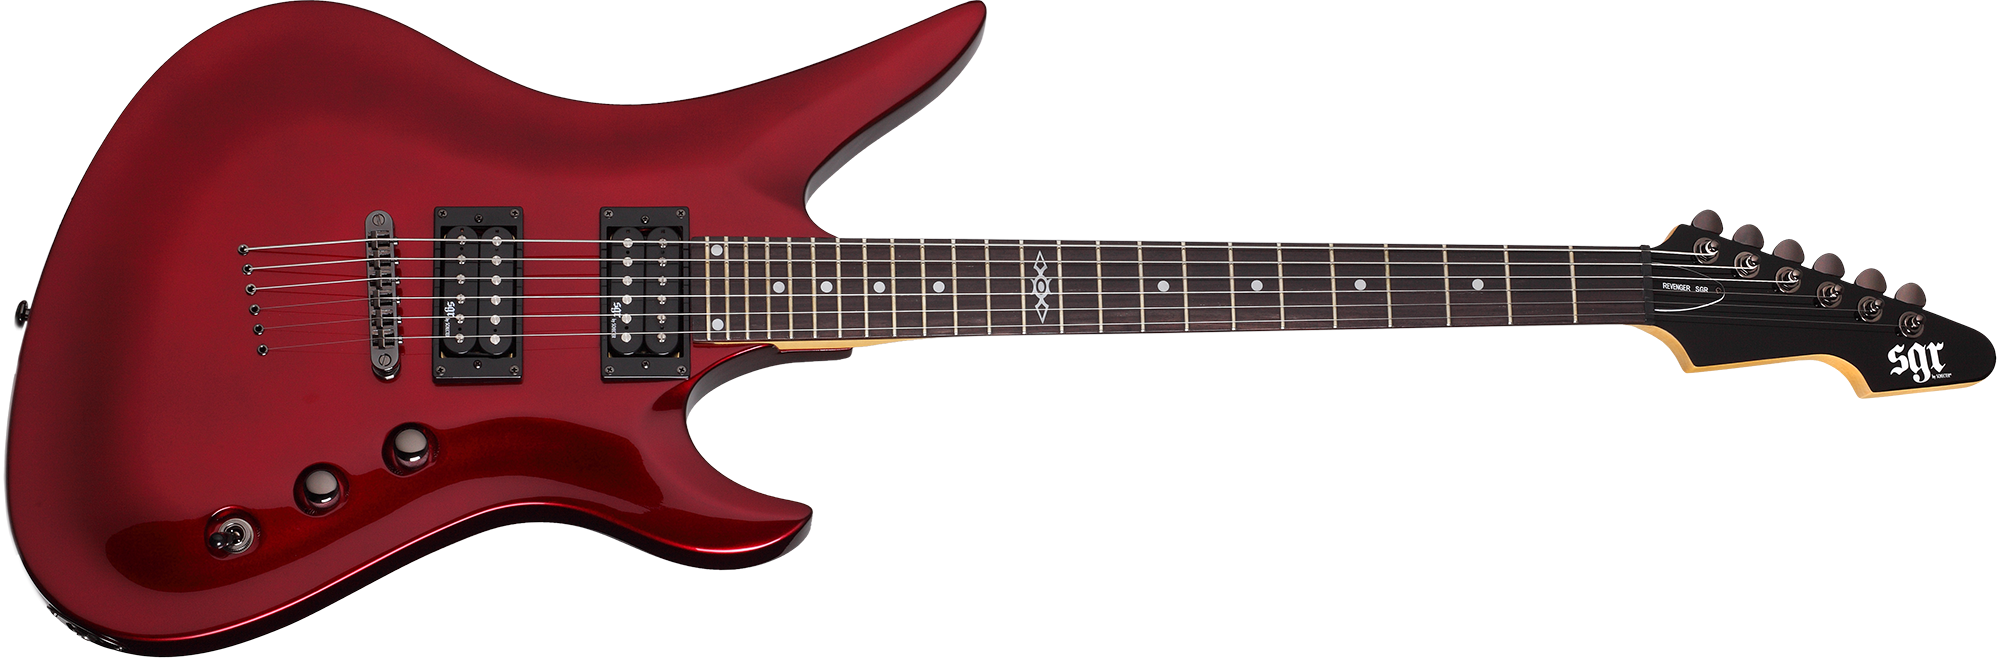 Schecter Avenger SGR by Schecter in Metallic Red MRED SKU 3826 - The Guitar World